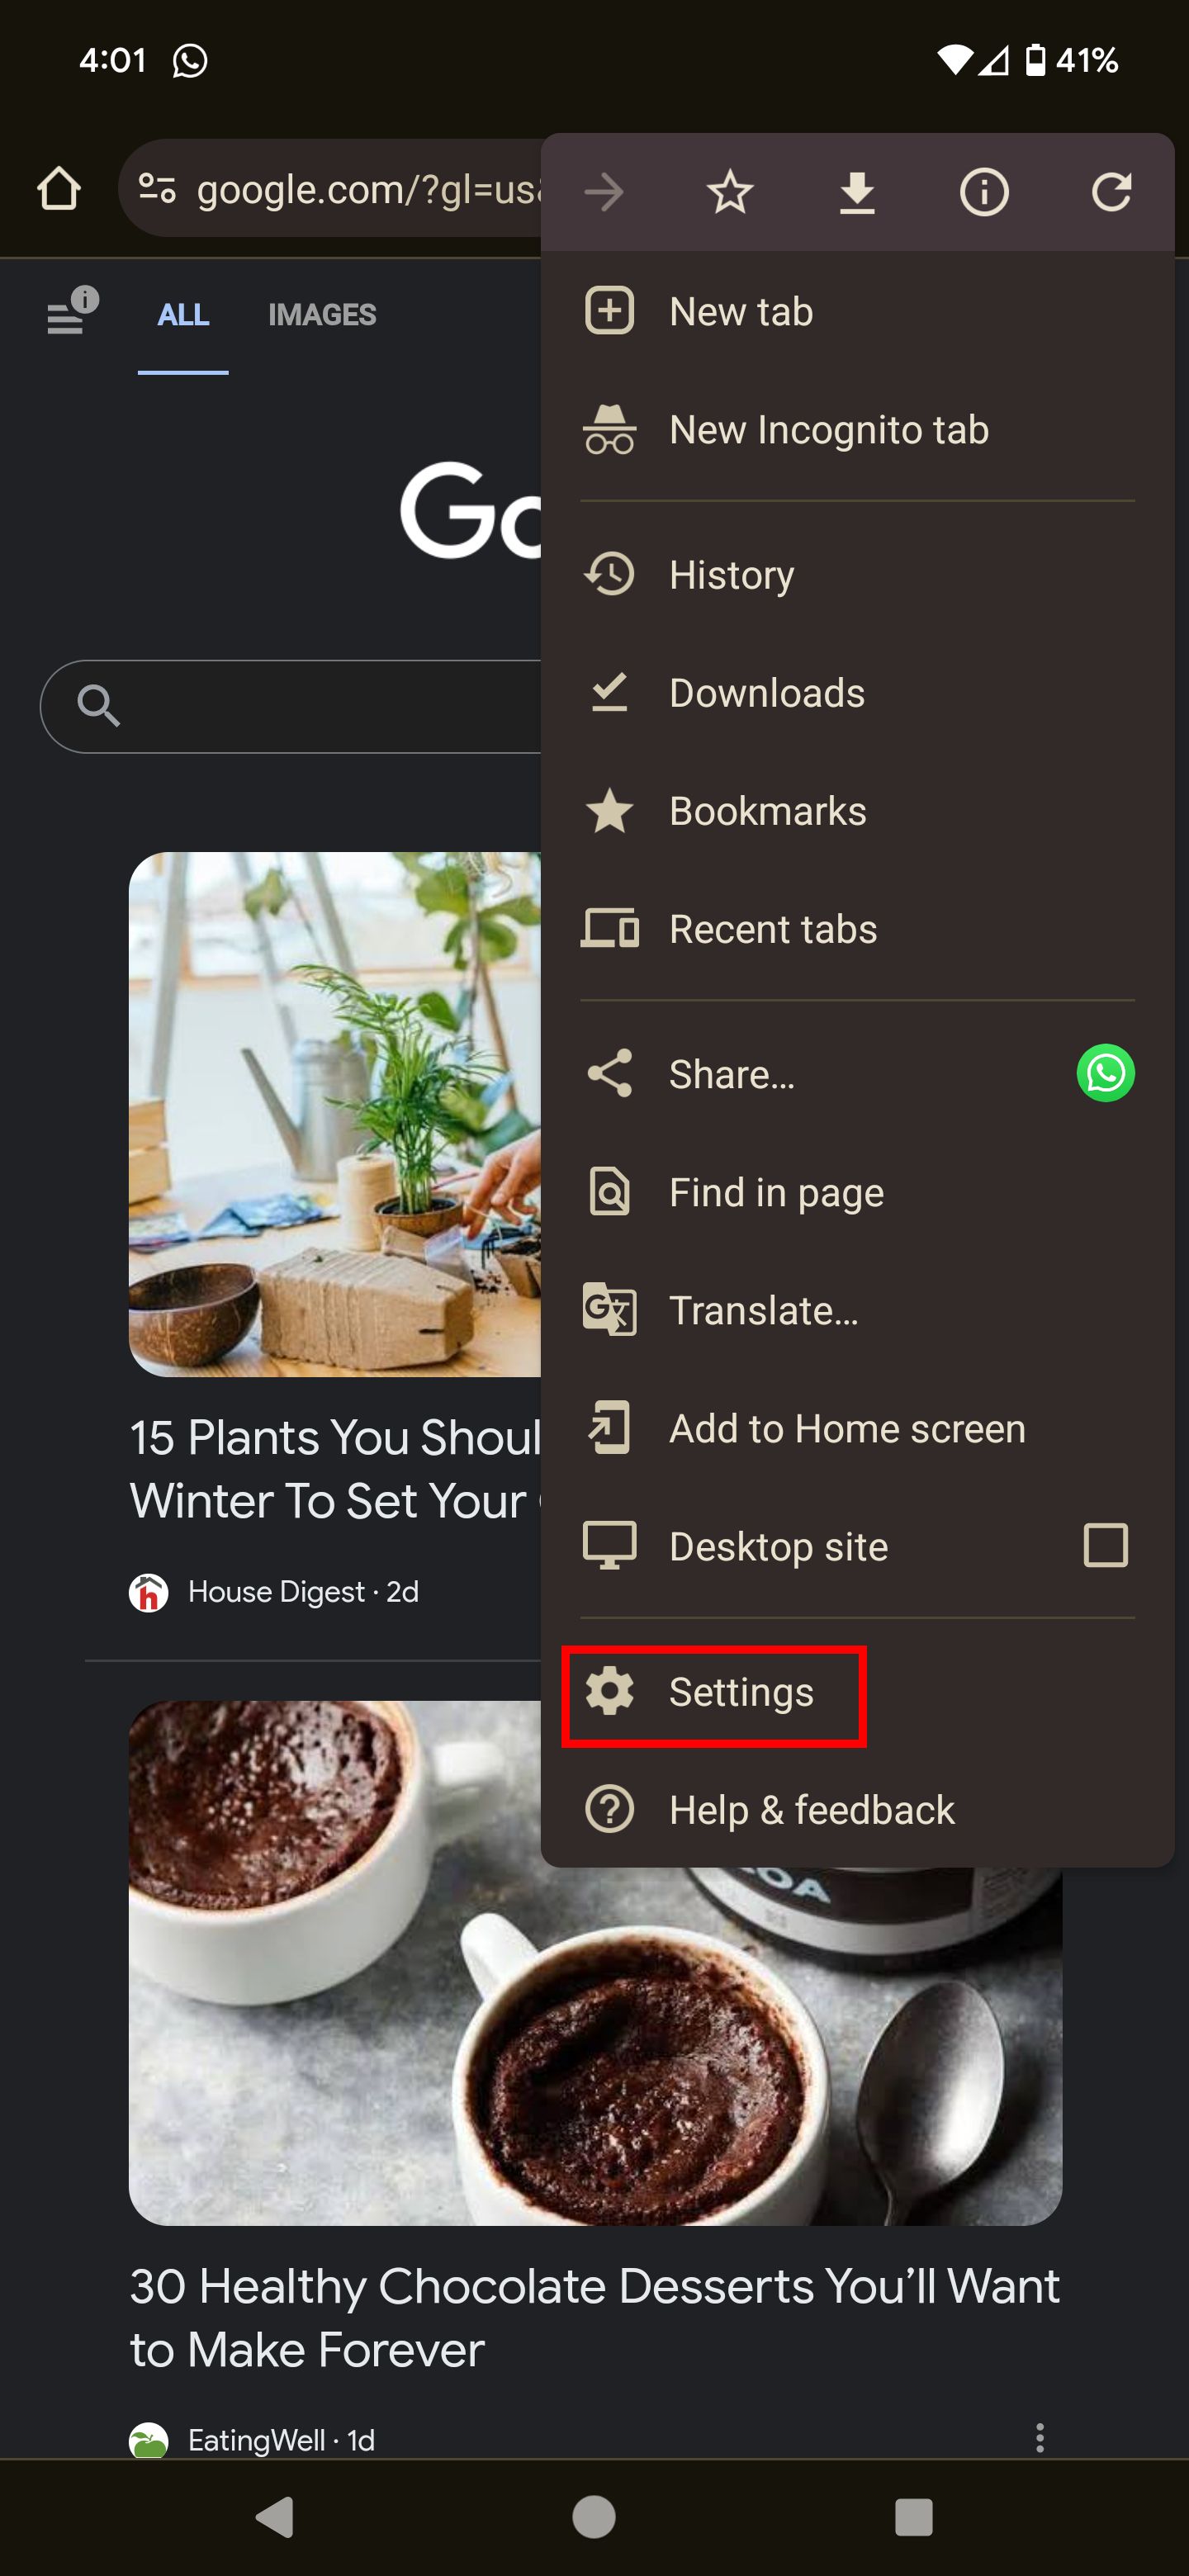 Select Settings from the drop-down menu